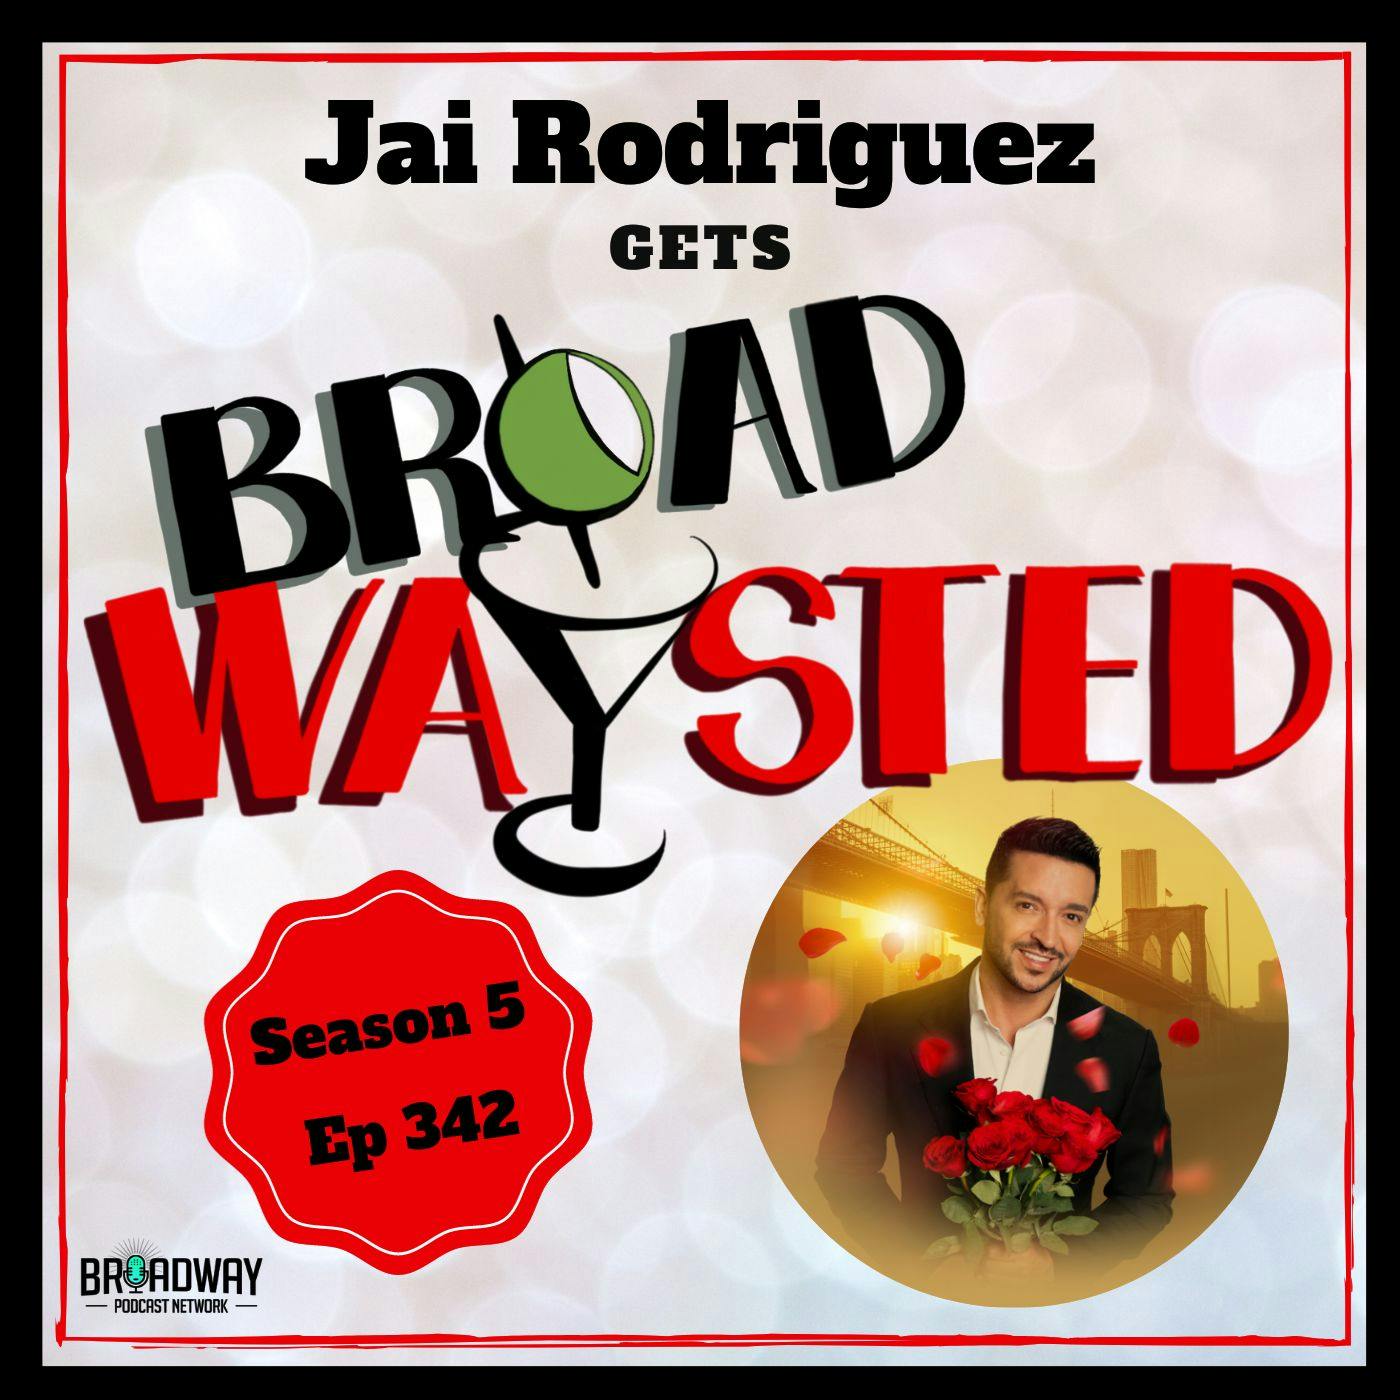 Episode 342: Jai Rodriguez gets Broadwaysted!